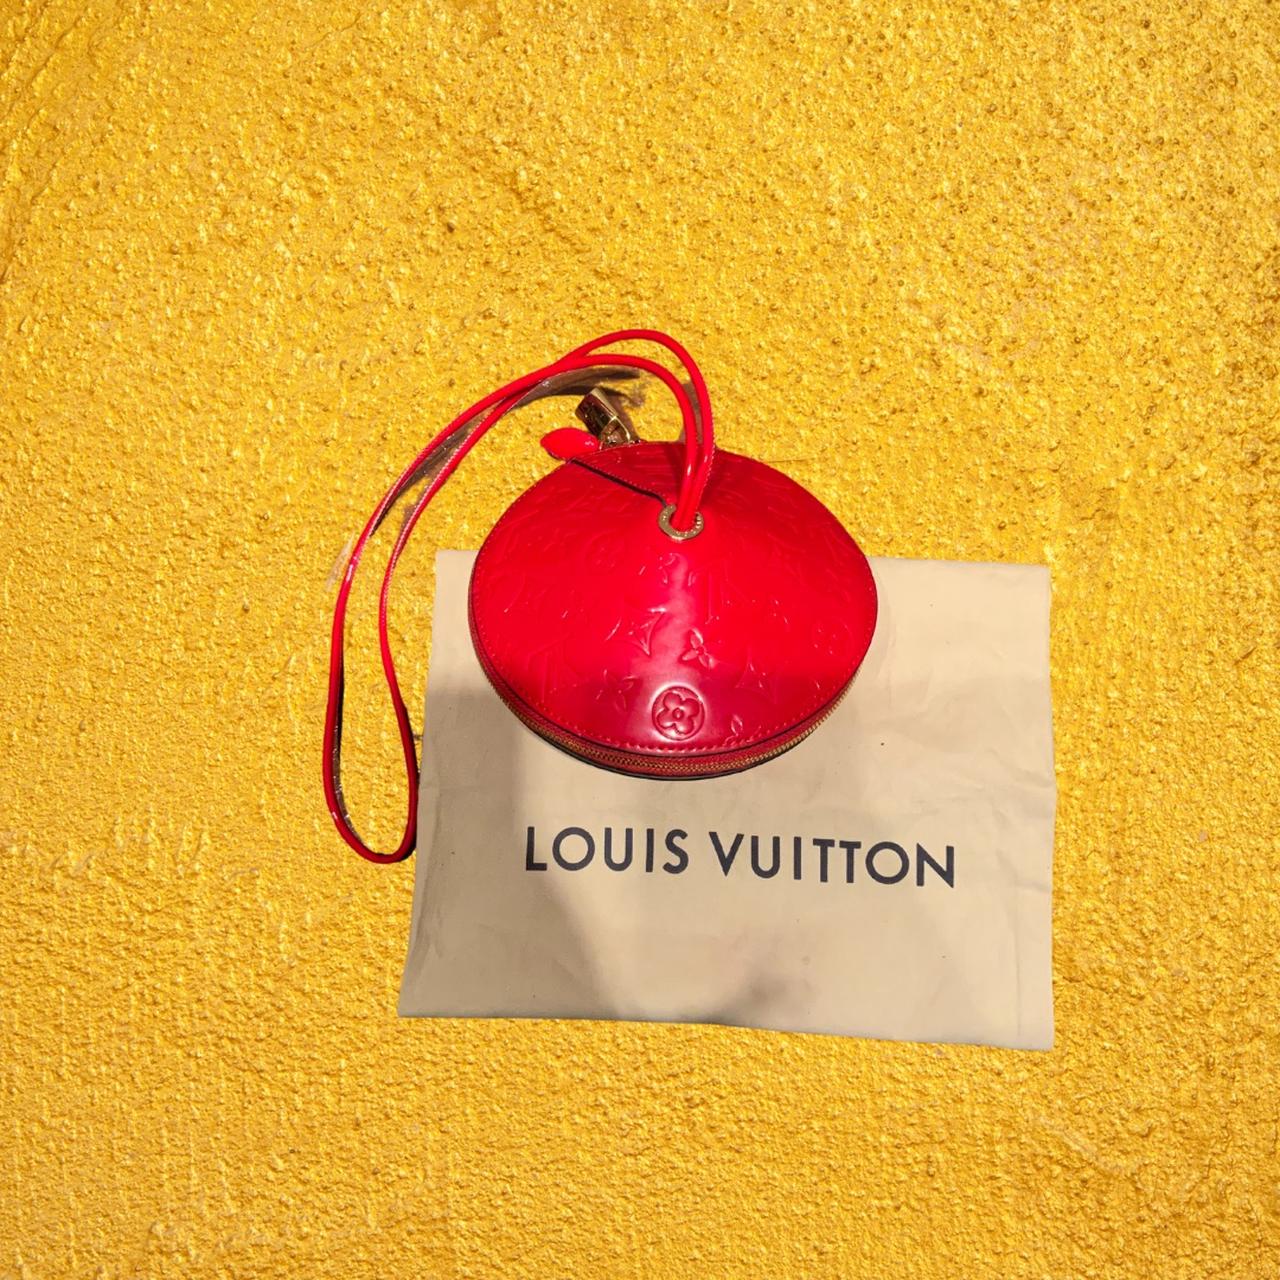 Louis Vuitton F/W 2019 Women's Collection